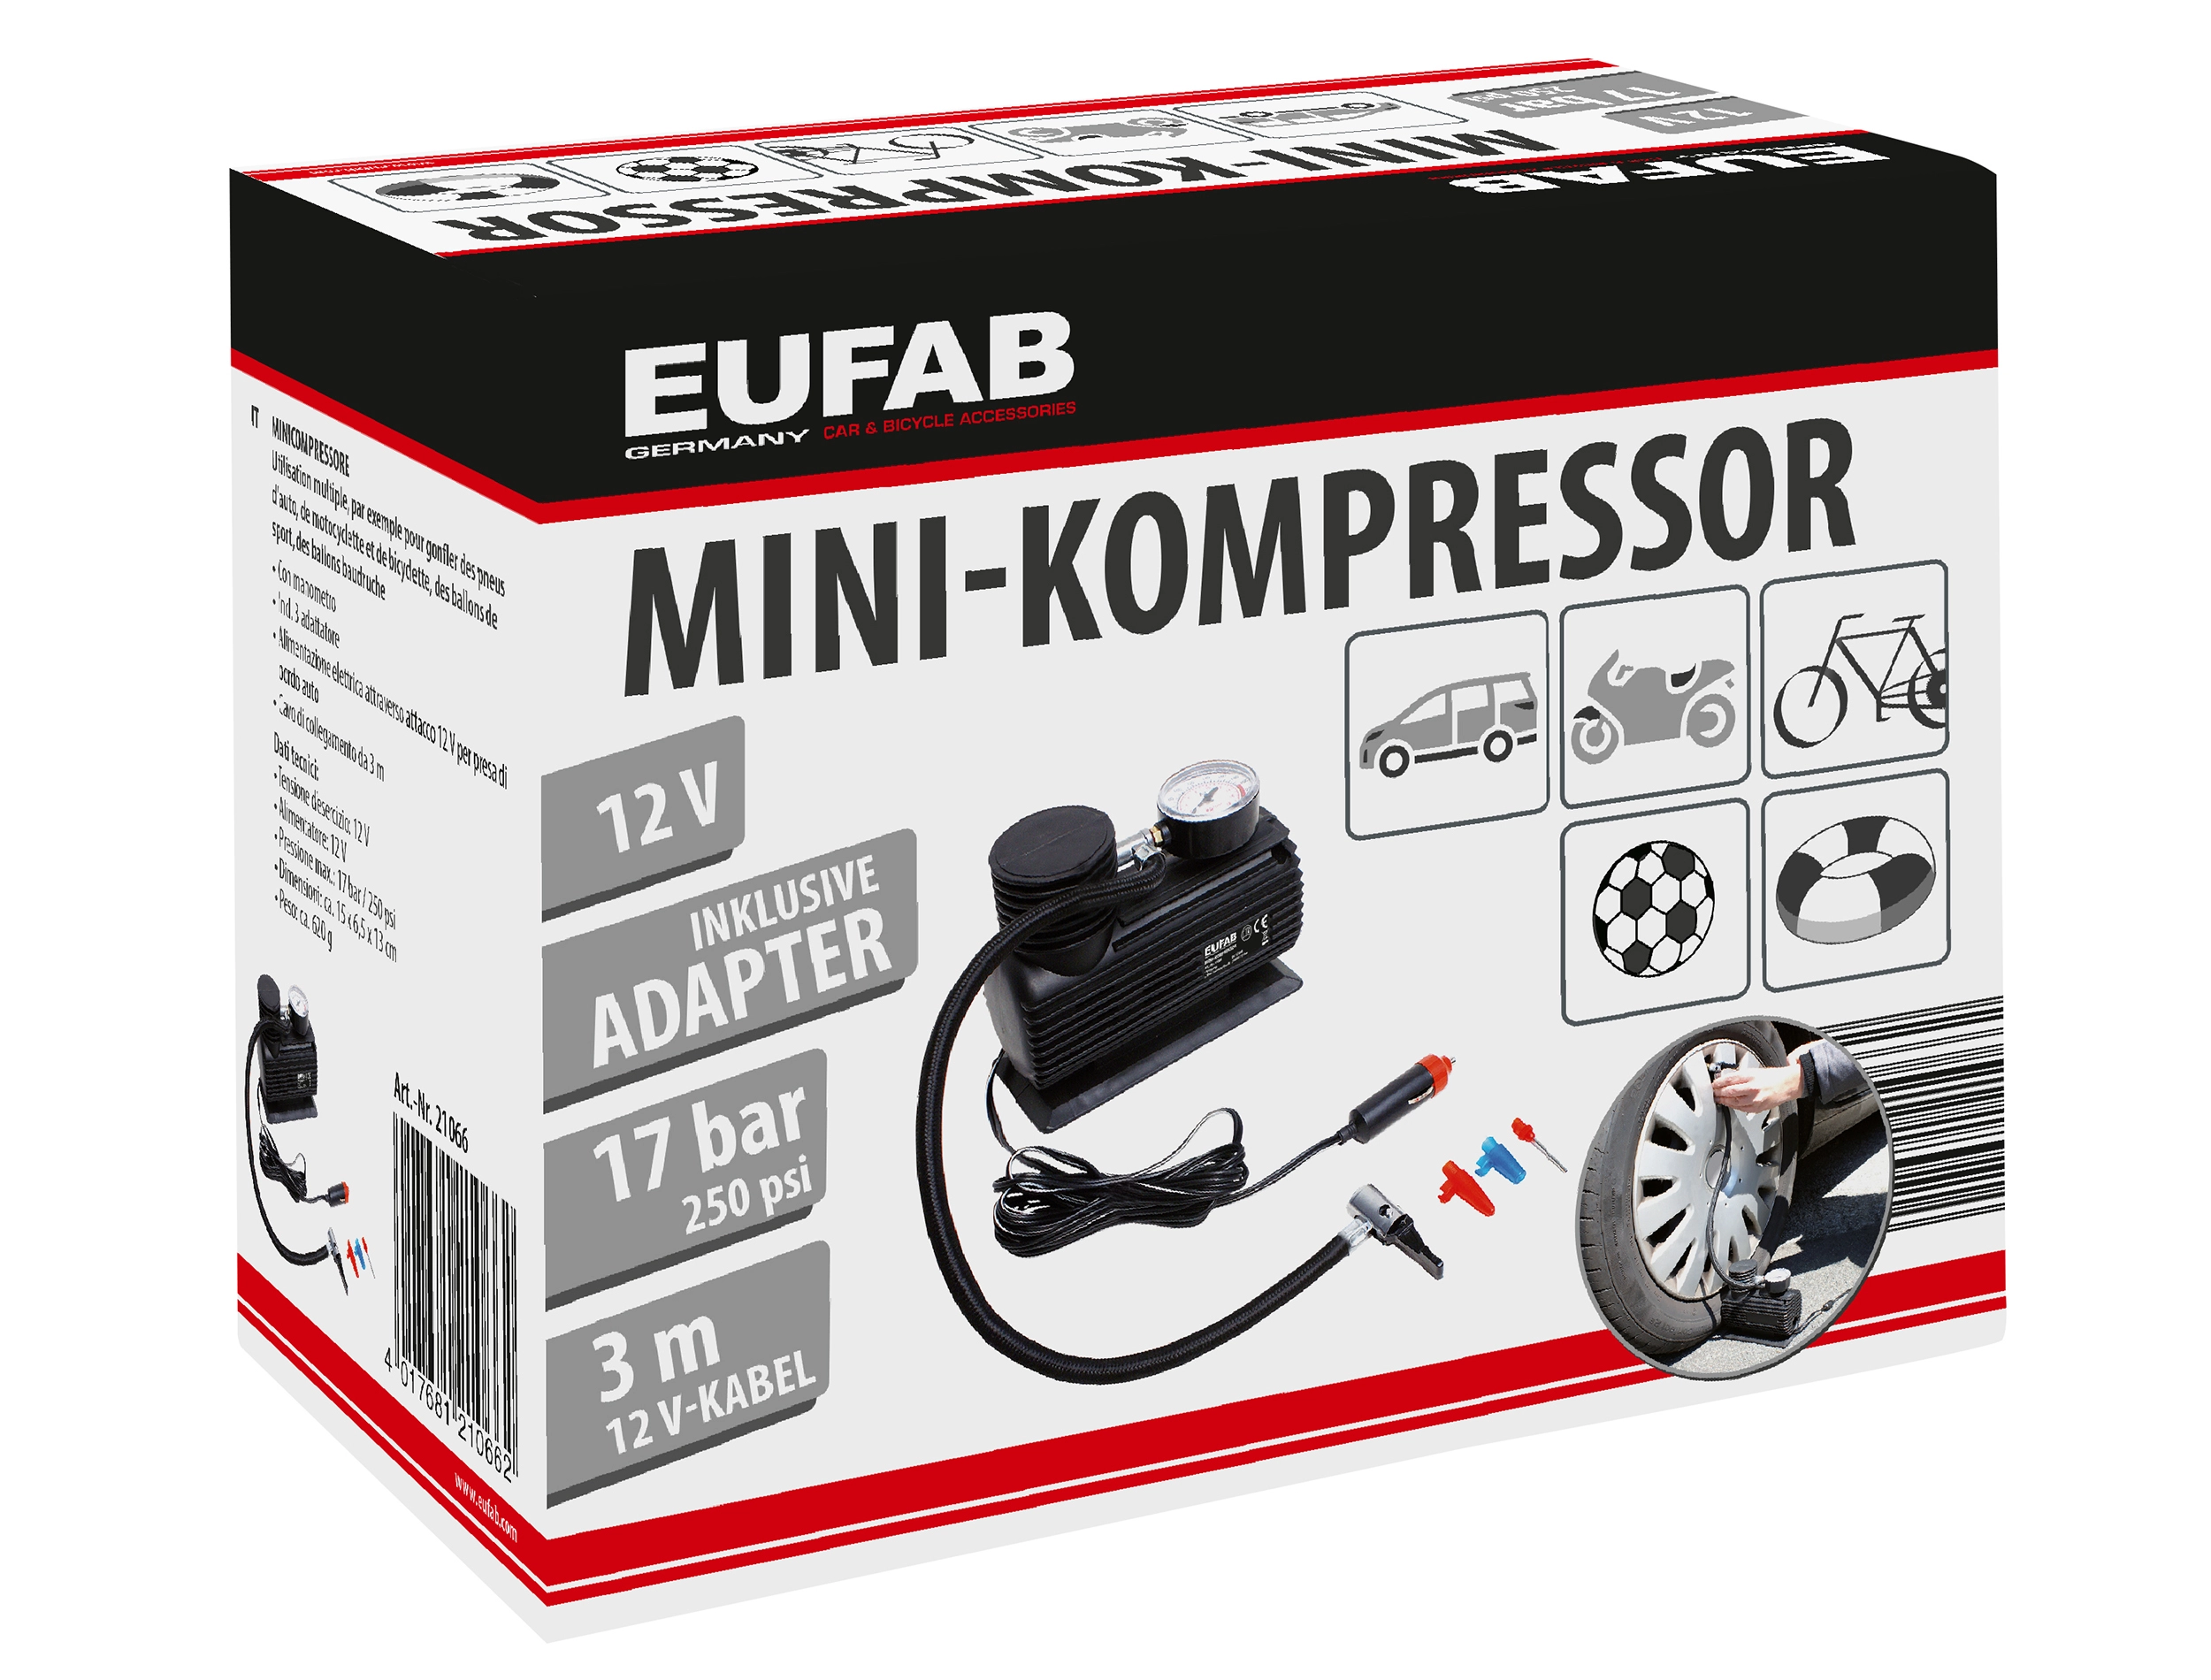 Eufab Mini-Kompressor 12 V 21066 kaufen bei OBI